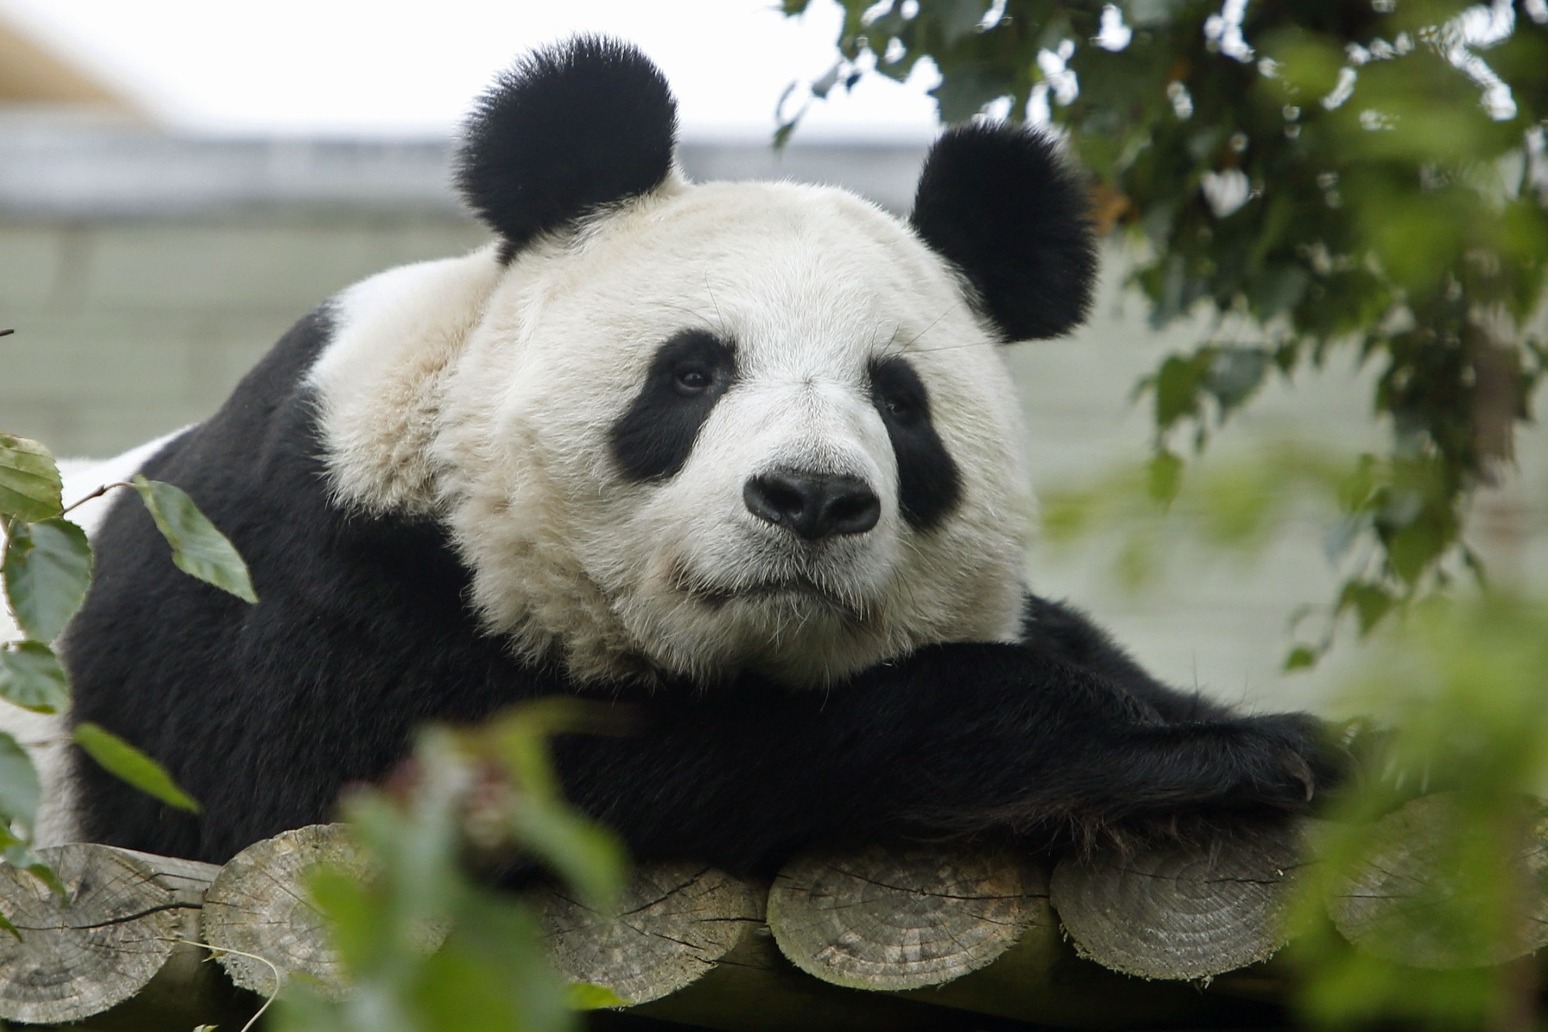 Final chance to see pandas at Edinburgh Zoo ahead of their return to China 